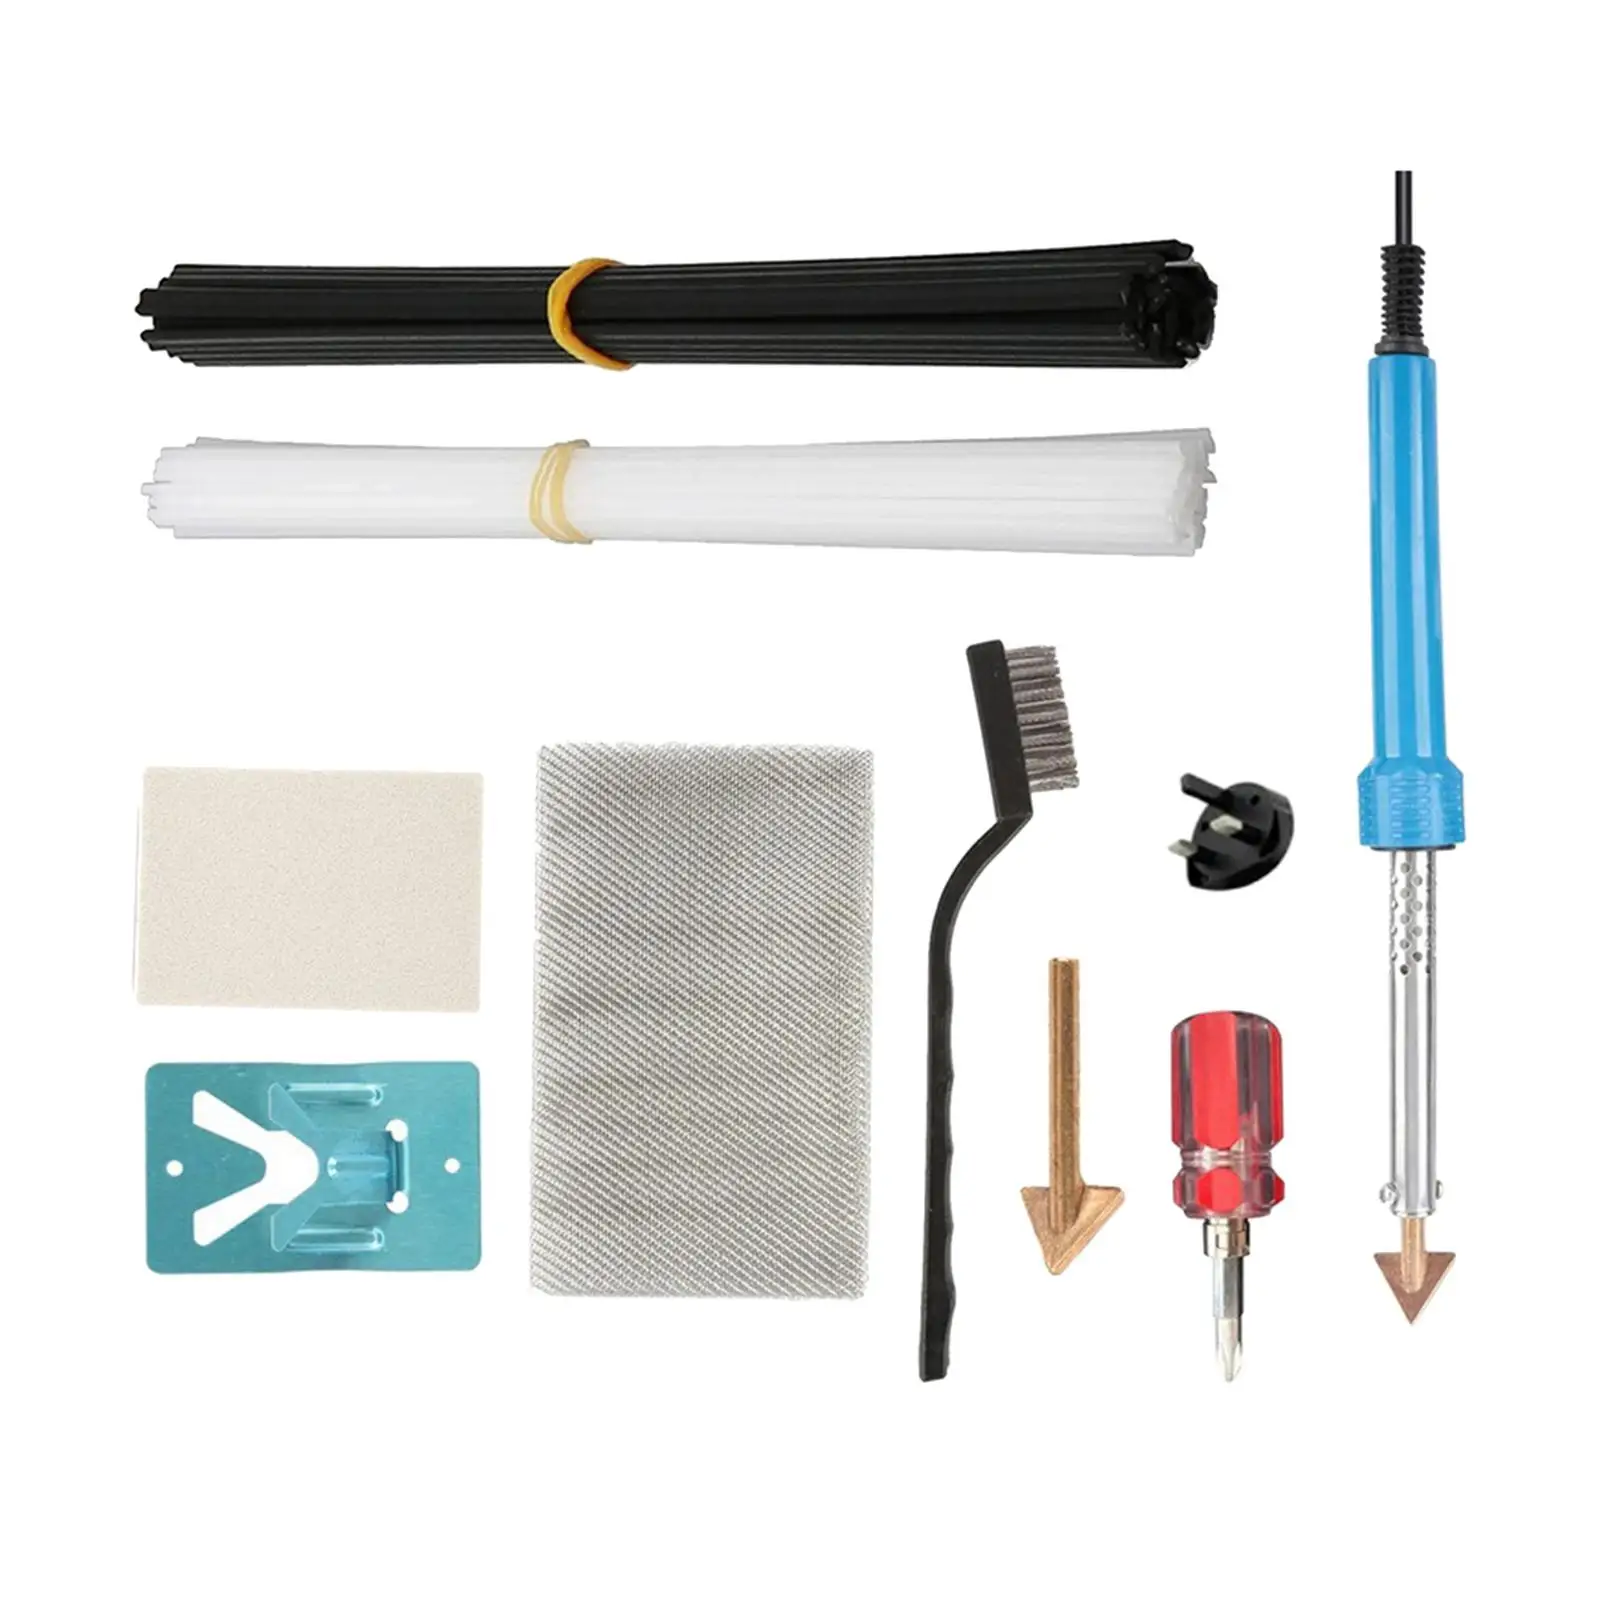 Plastic Welding Kit 80W 1 Wire Brush 40 Plastic Rods Professional 2 Sandpaper Surface Repair Welder Tools for Car Bumper Kayak